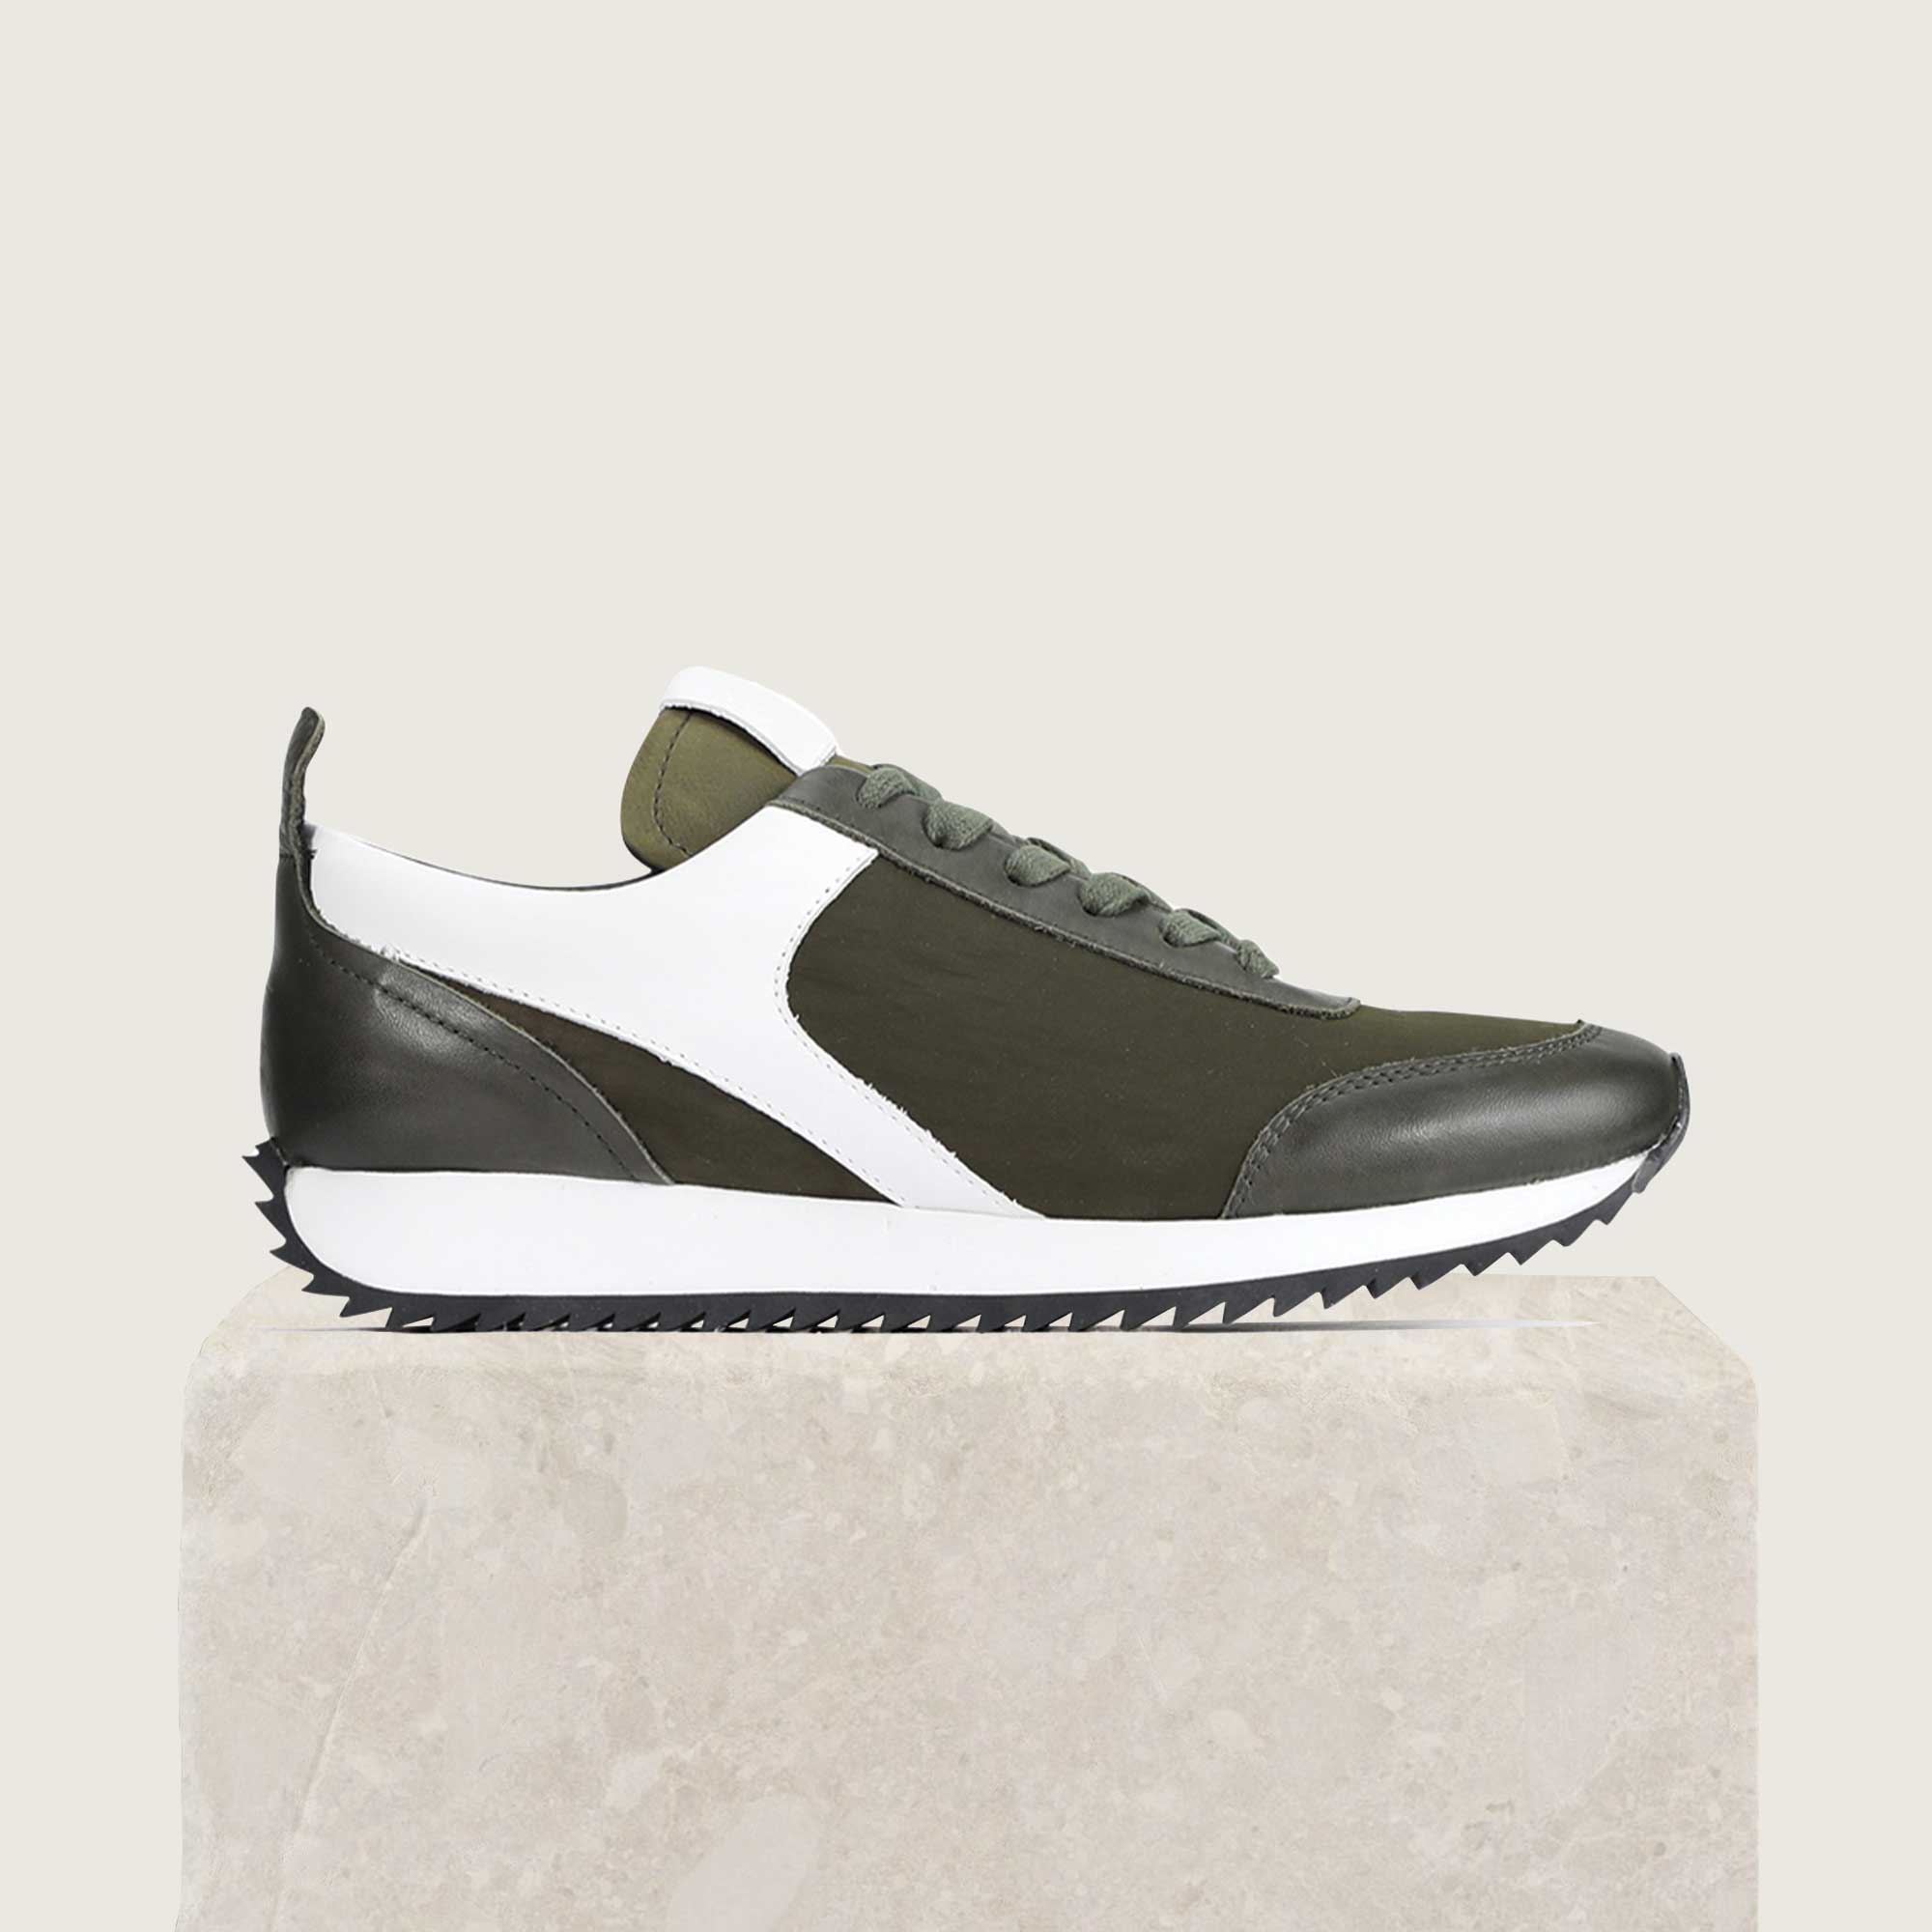 SPRING - EOS Footwear - Sneakers #color_Dark/olive/combo